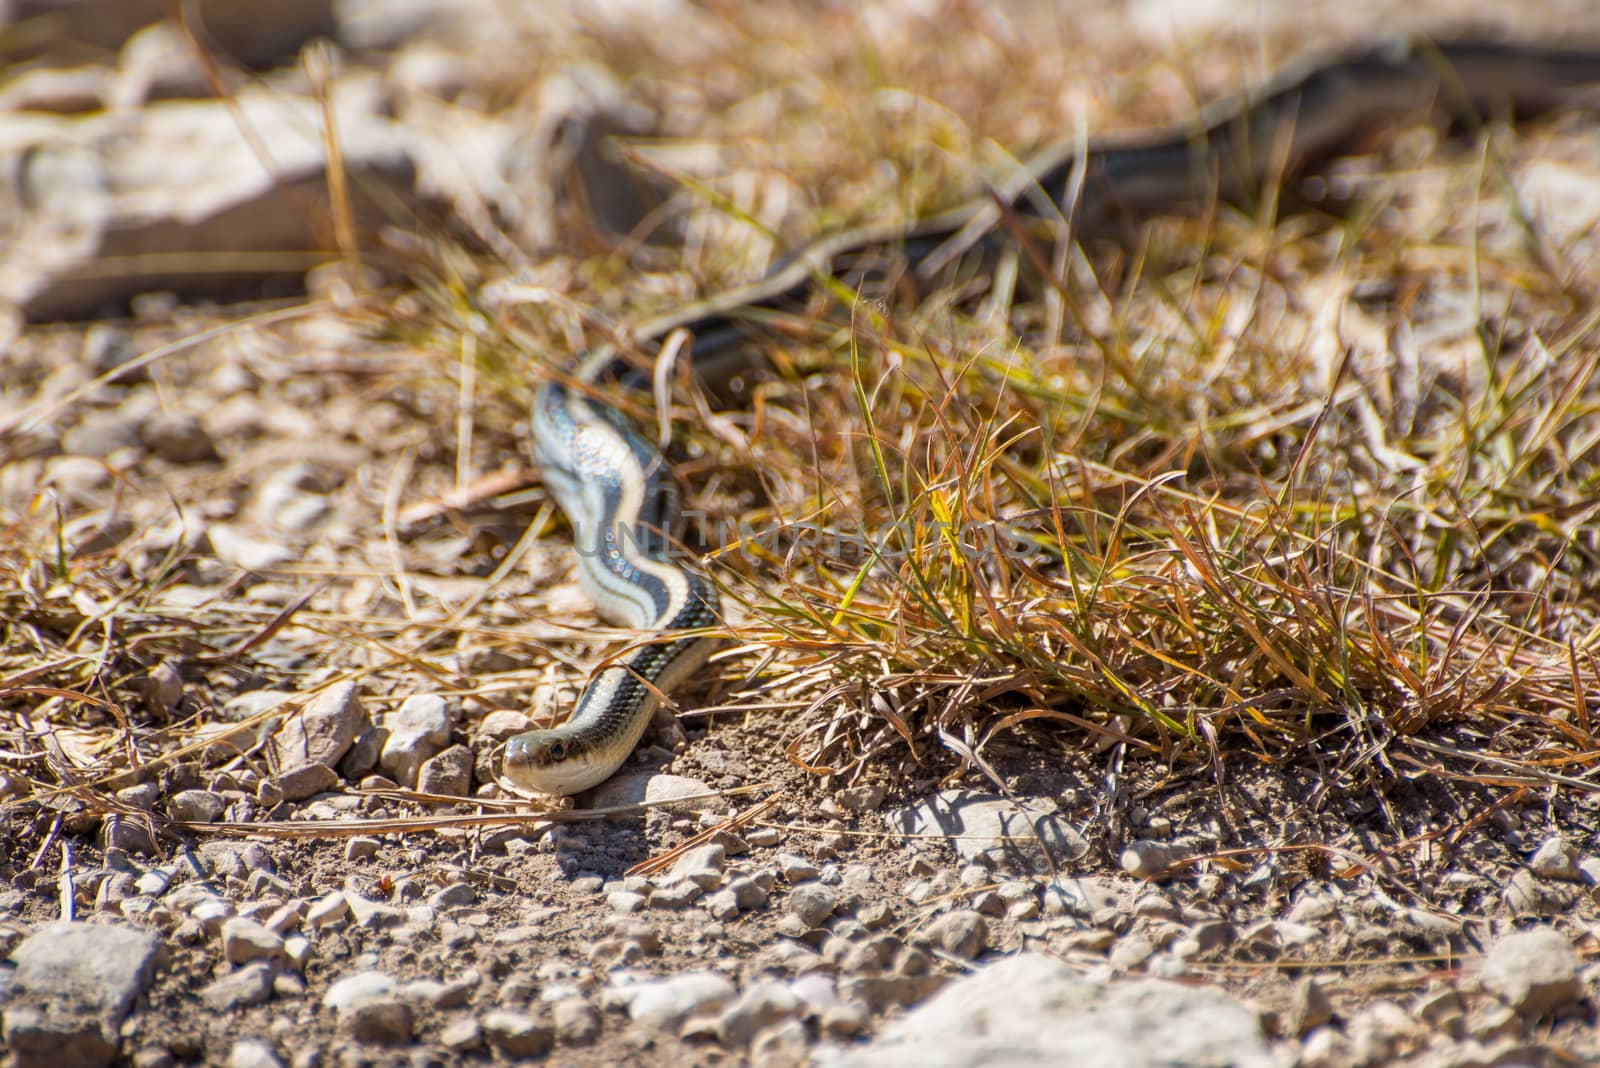 Wild South Texas garter snake slithering through the grass